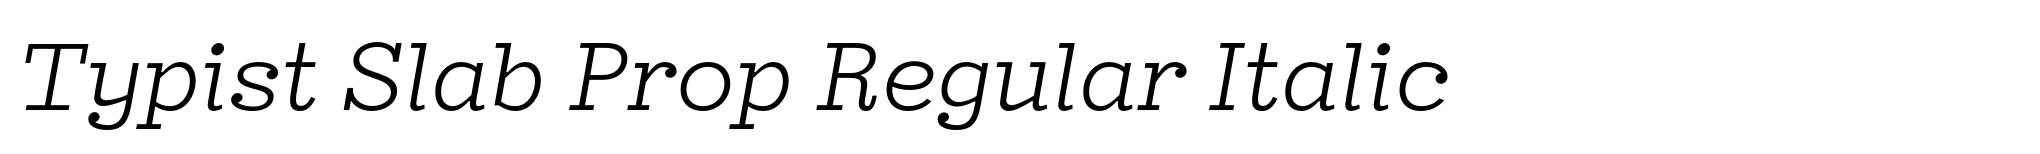 Typist Slab Prop Regular Italic image